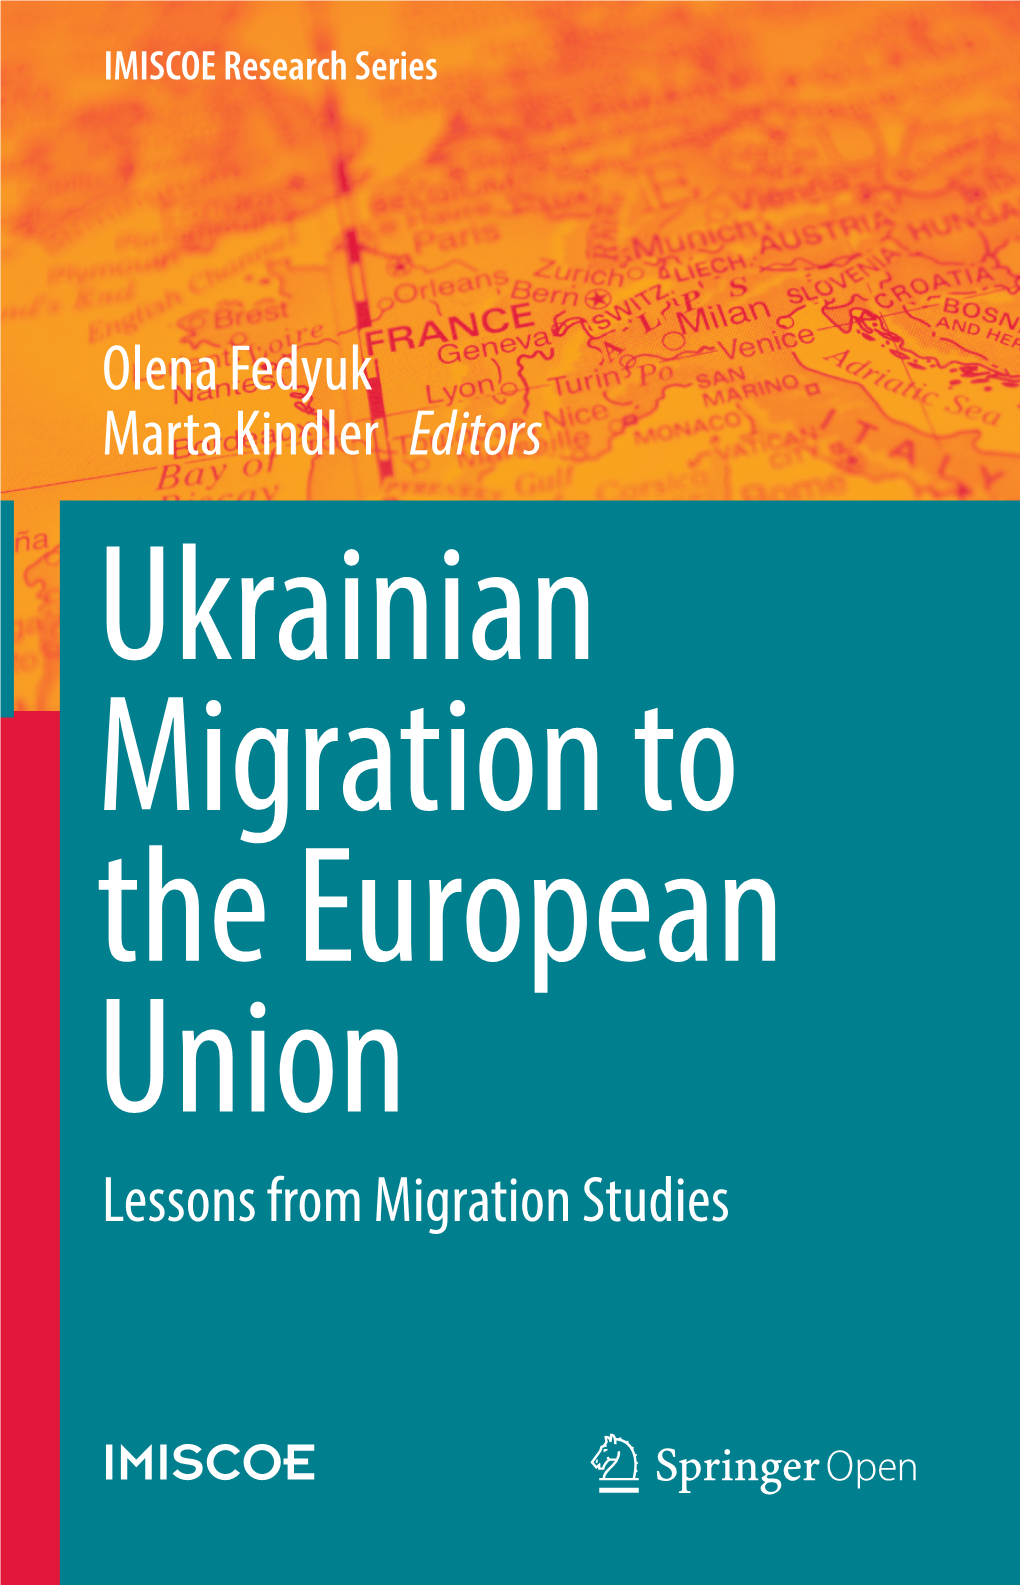 Olena Fedyuk Marta Kindler Editors Lessons from Migration Studies